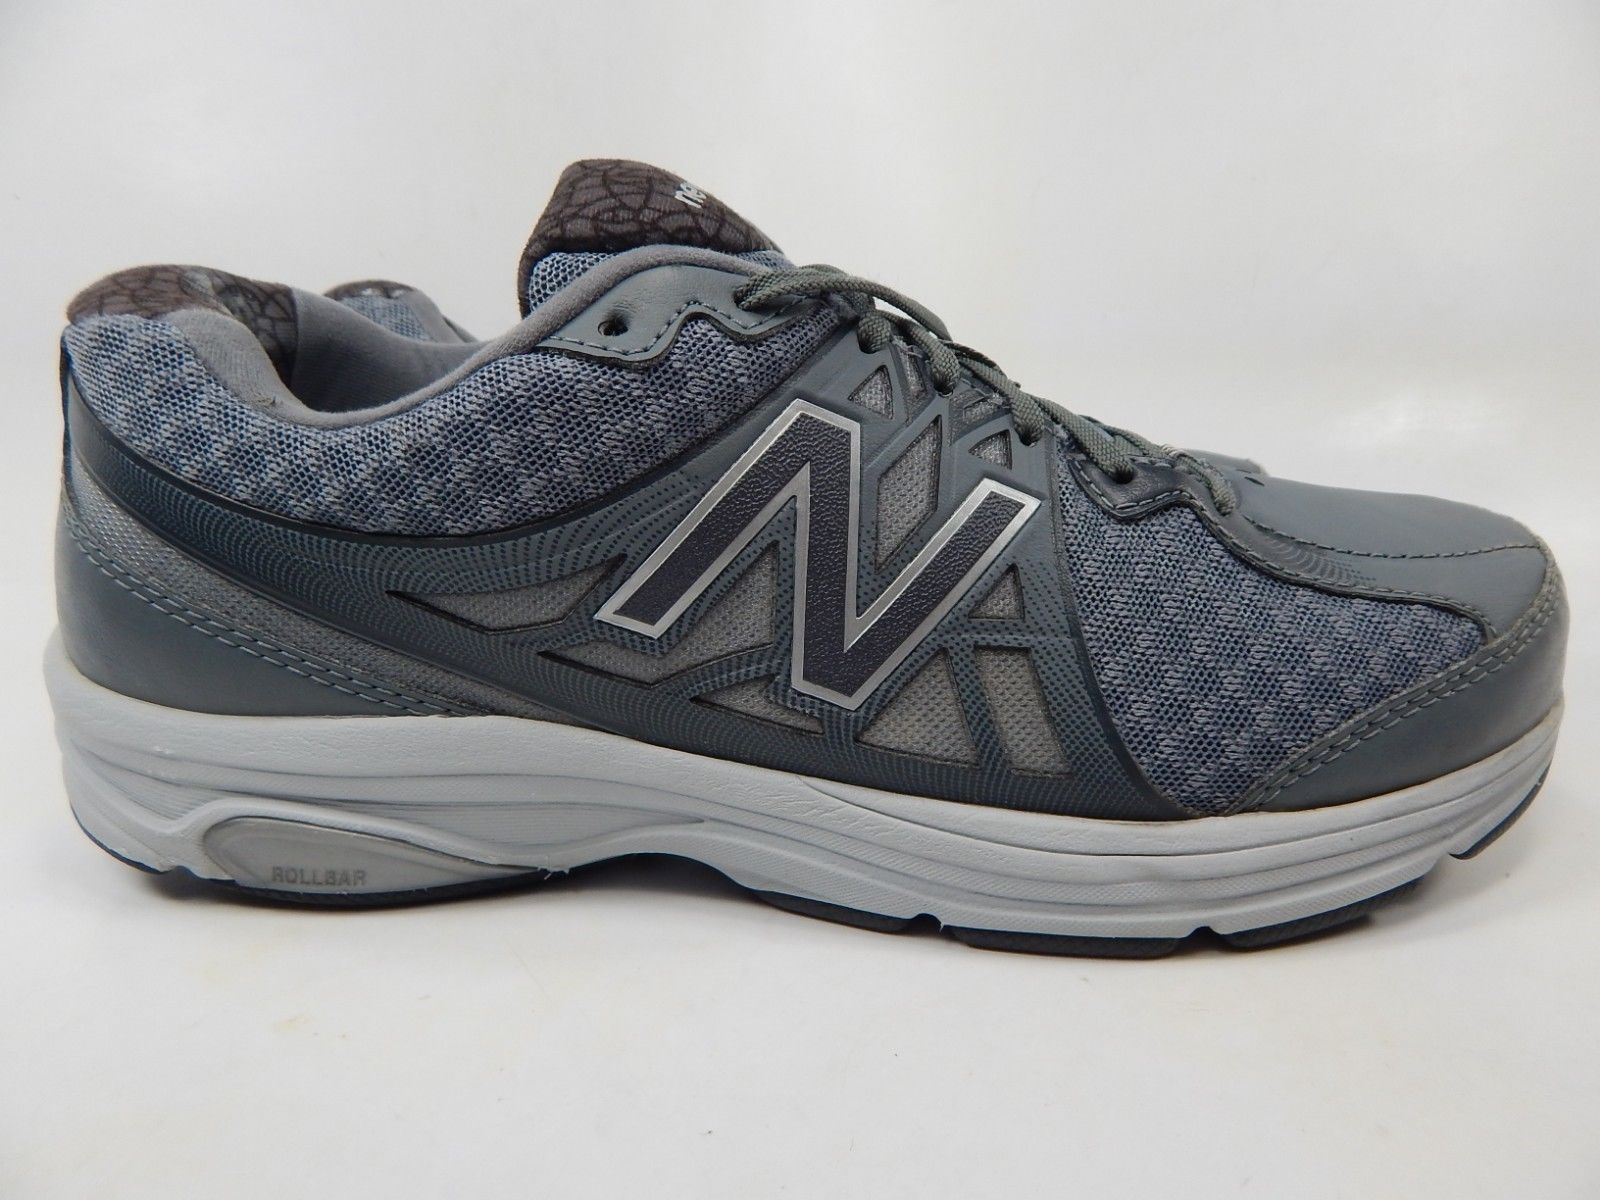 New Balance 847 v2 Size US 9.5 M (B) EU 41 Women's Walking Shoes Gray ...